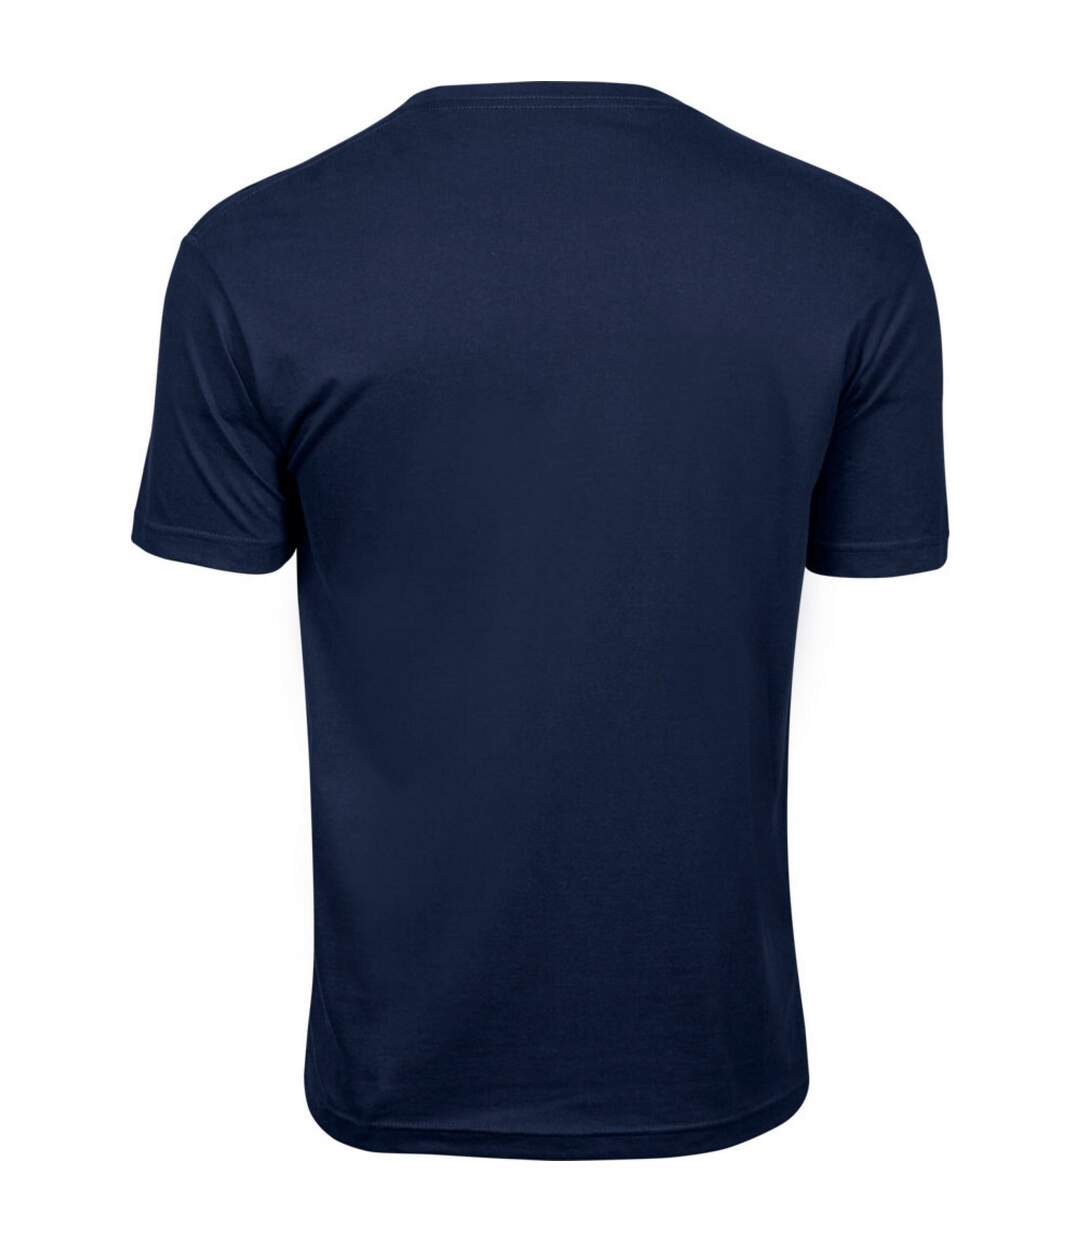 Tee Jays Mens Soft T-Shirt (Navy)